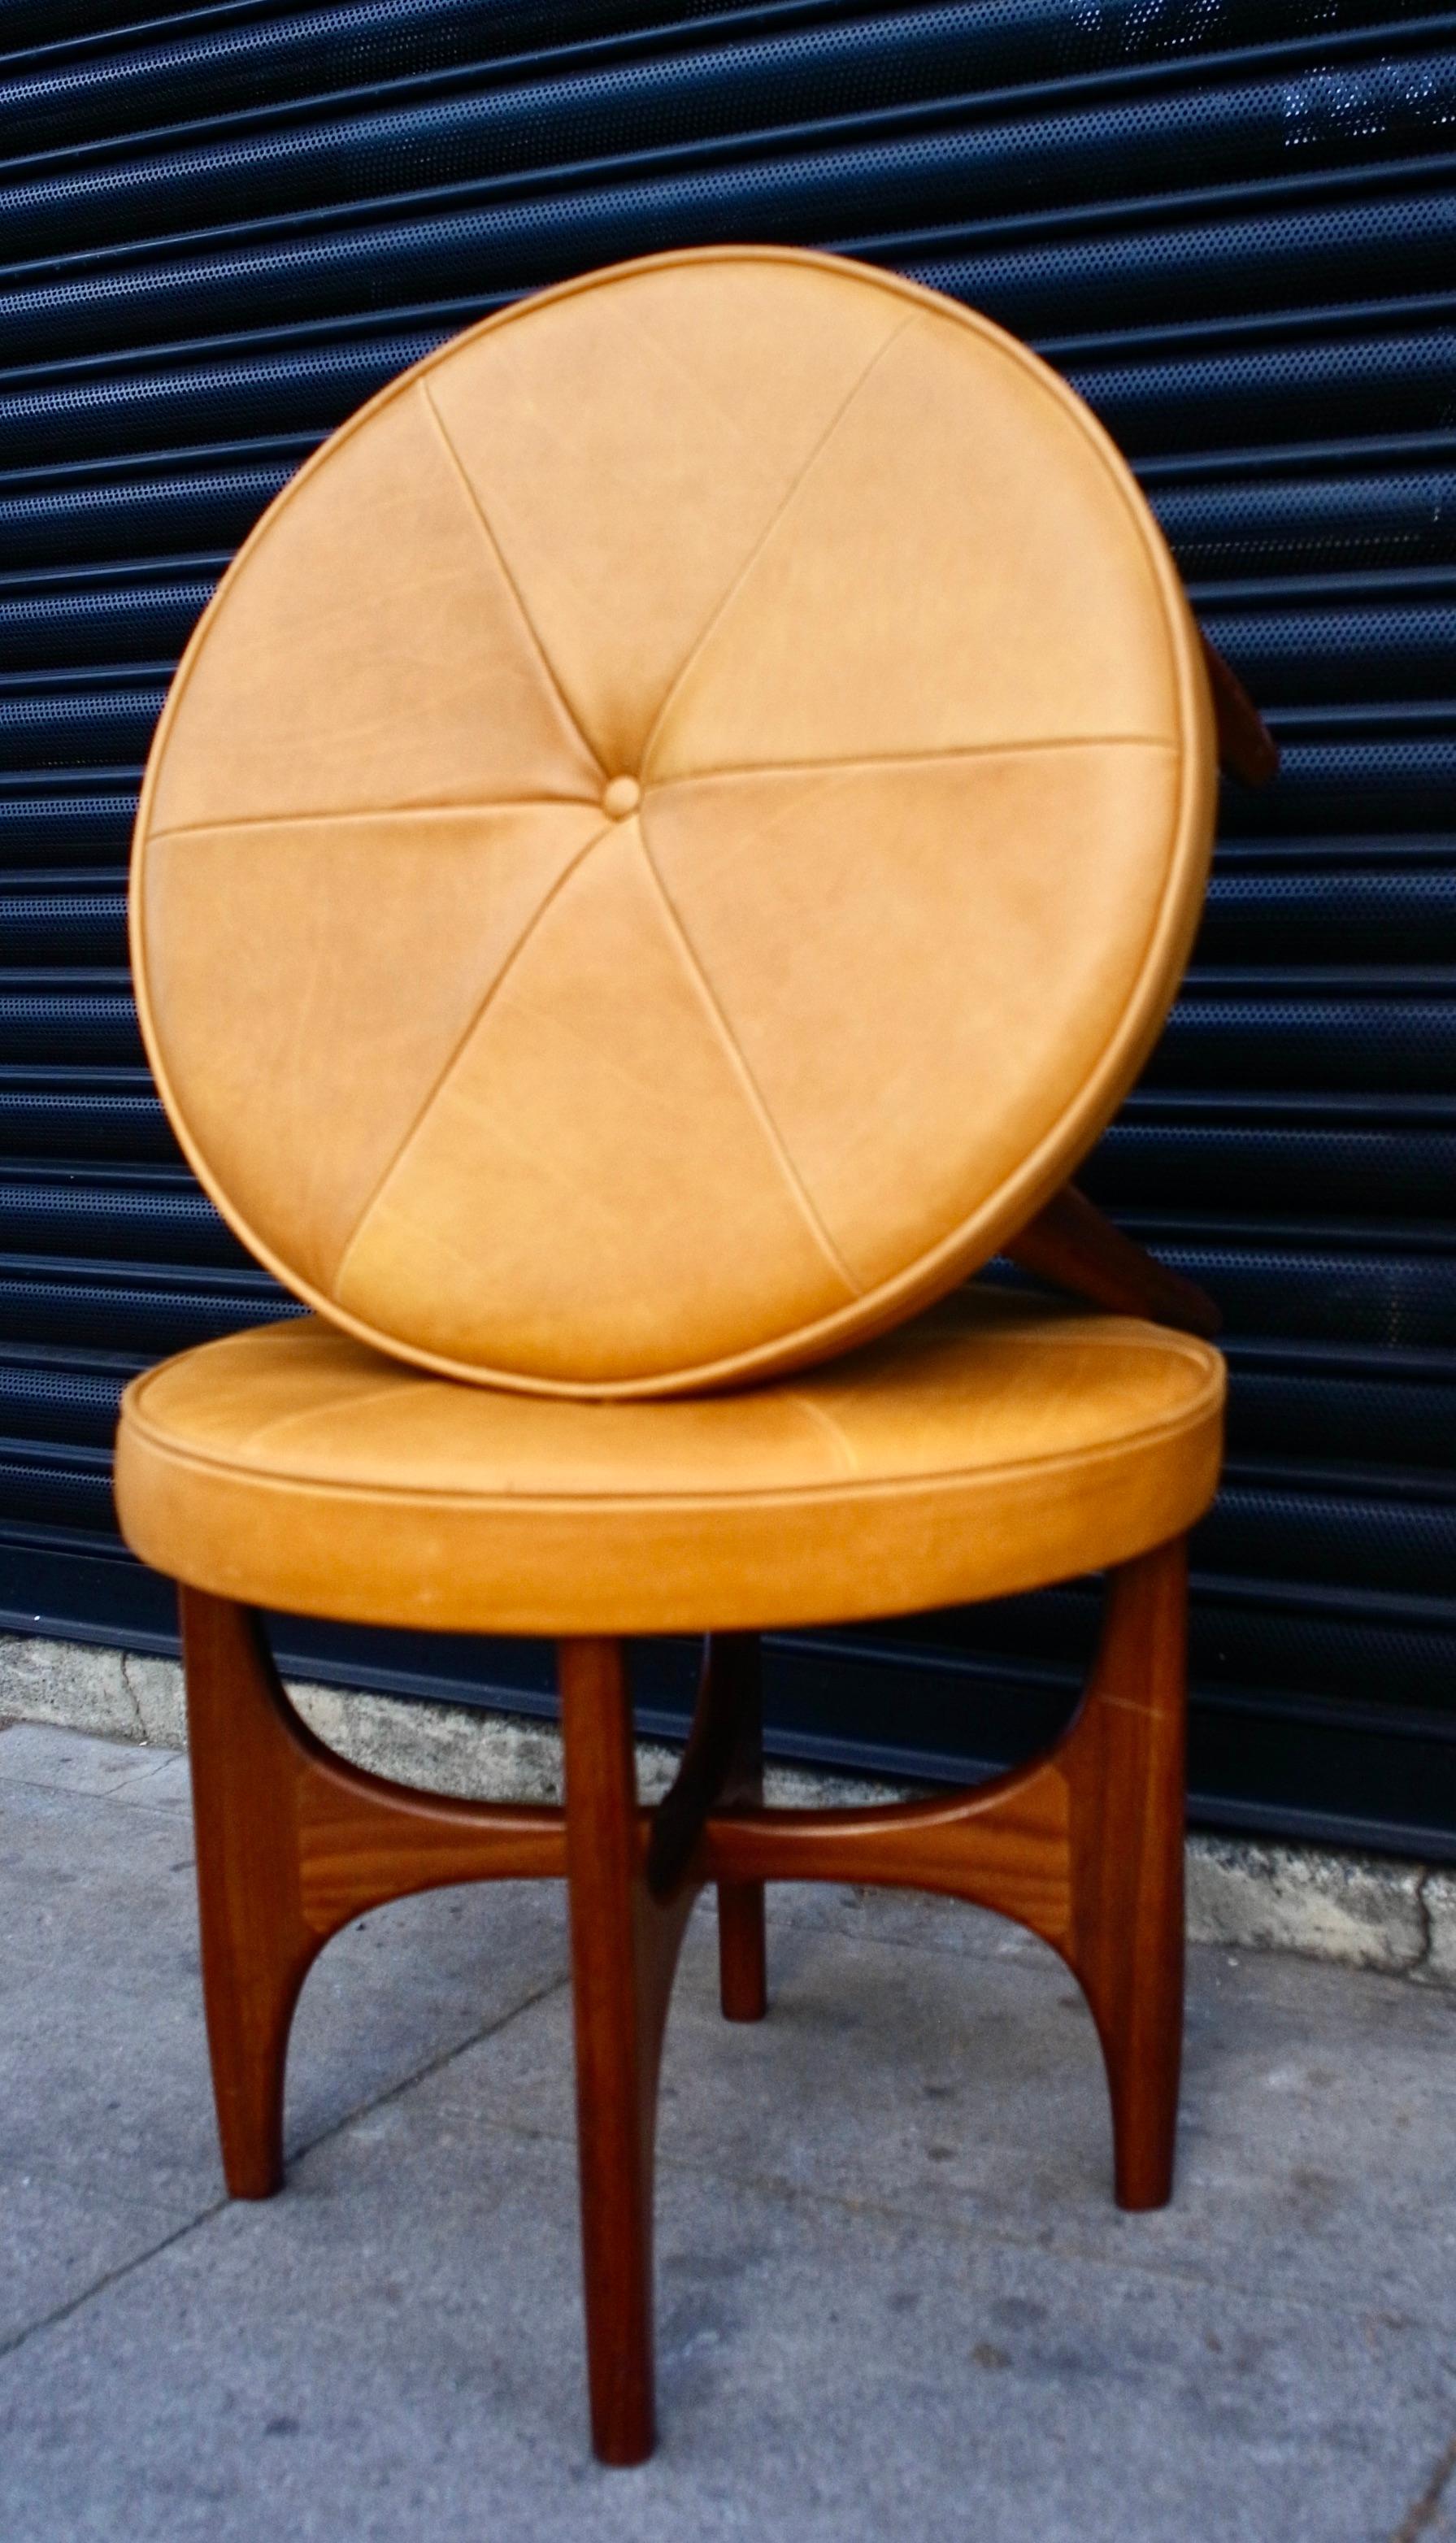 1970s English G-plan Teak based leather/cloth footstool designed by Kofod larsen For Sale 4